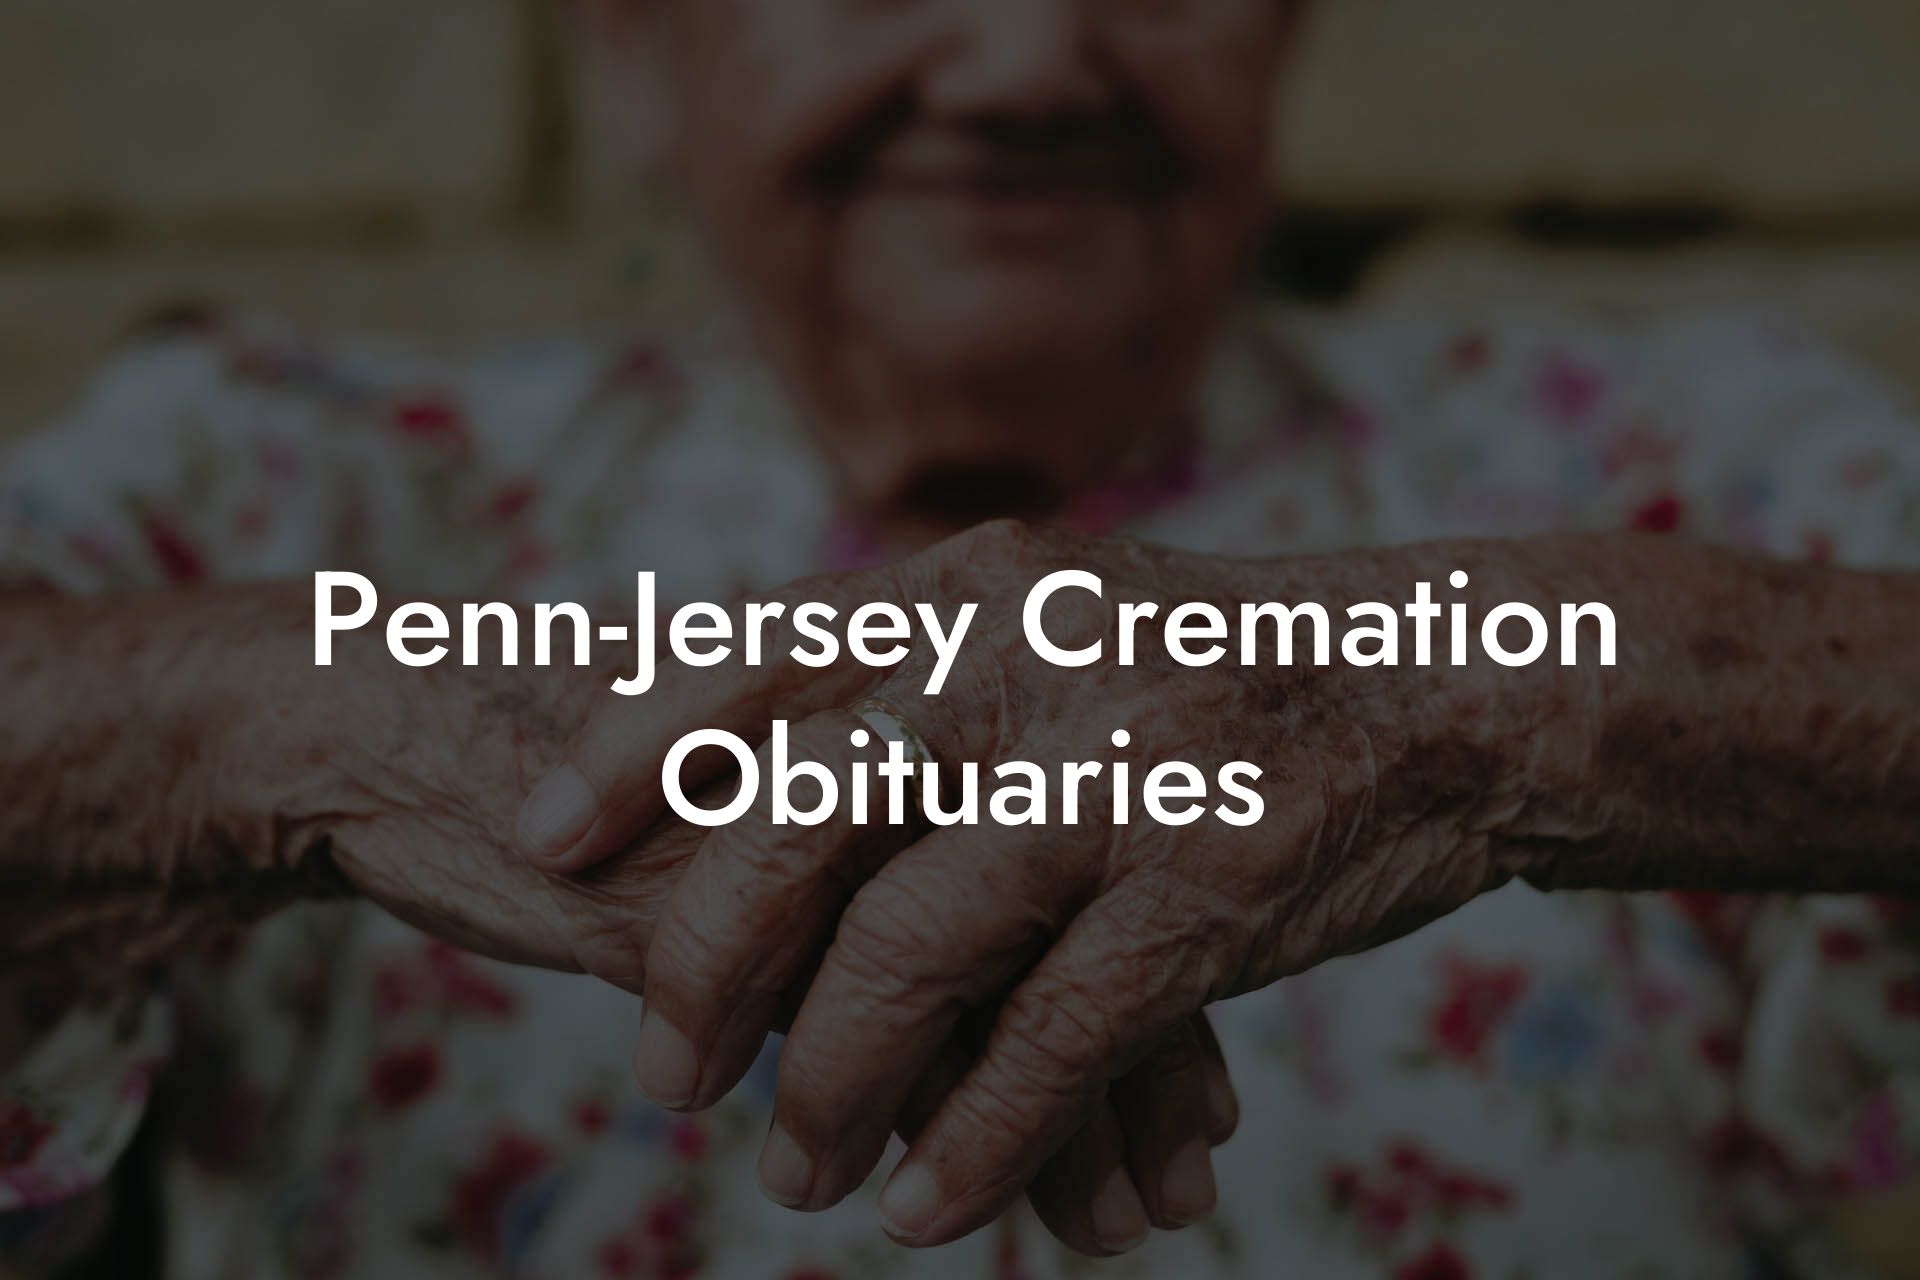 Penn-Jersey Cremation Obituaries